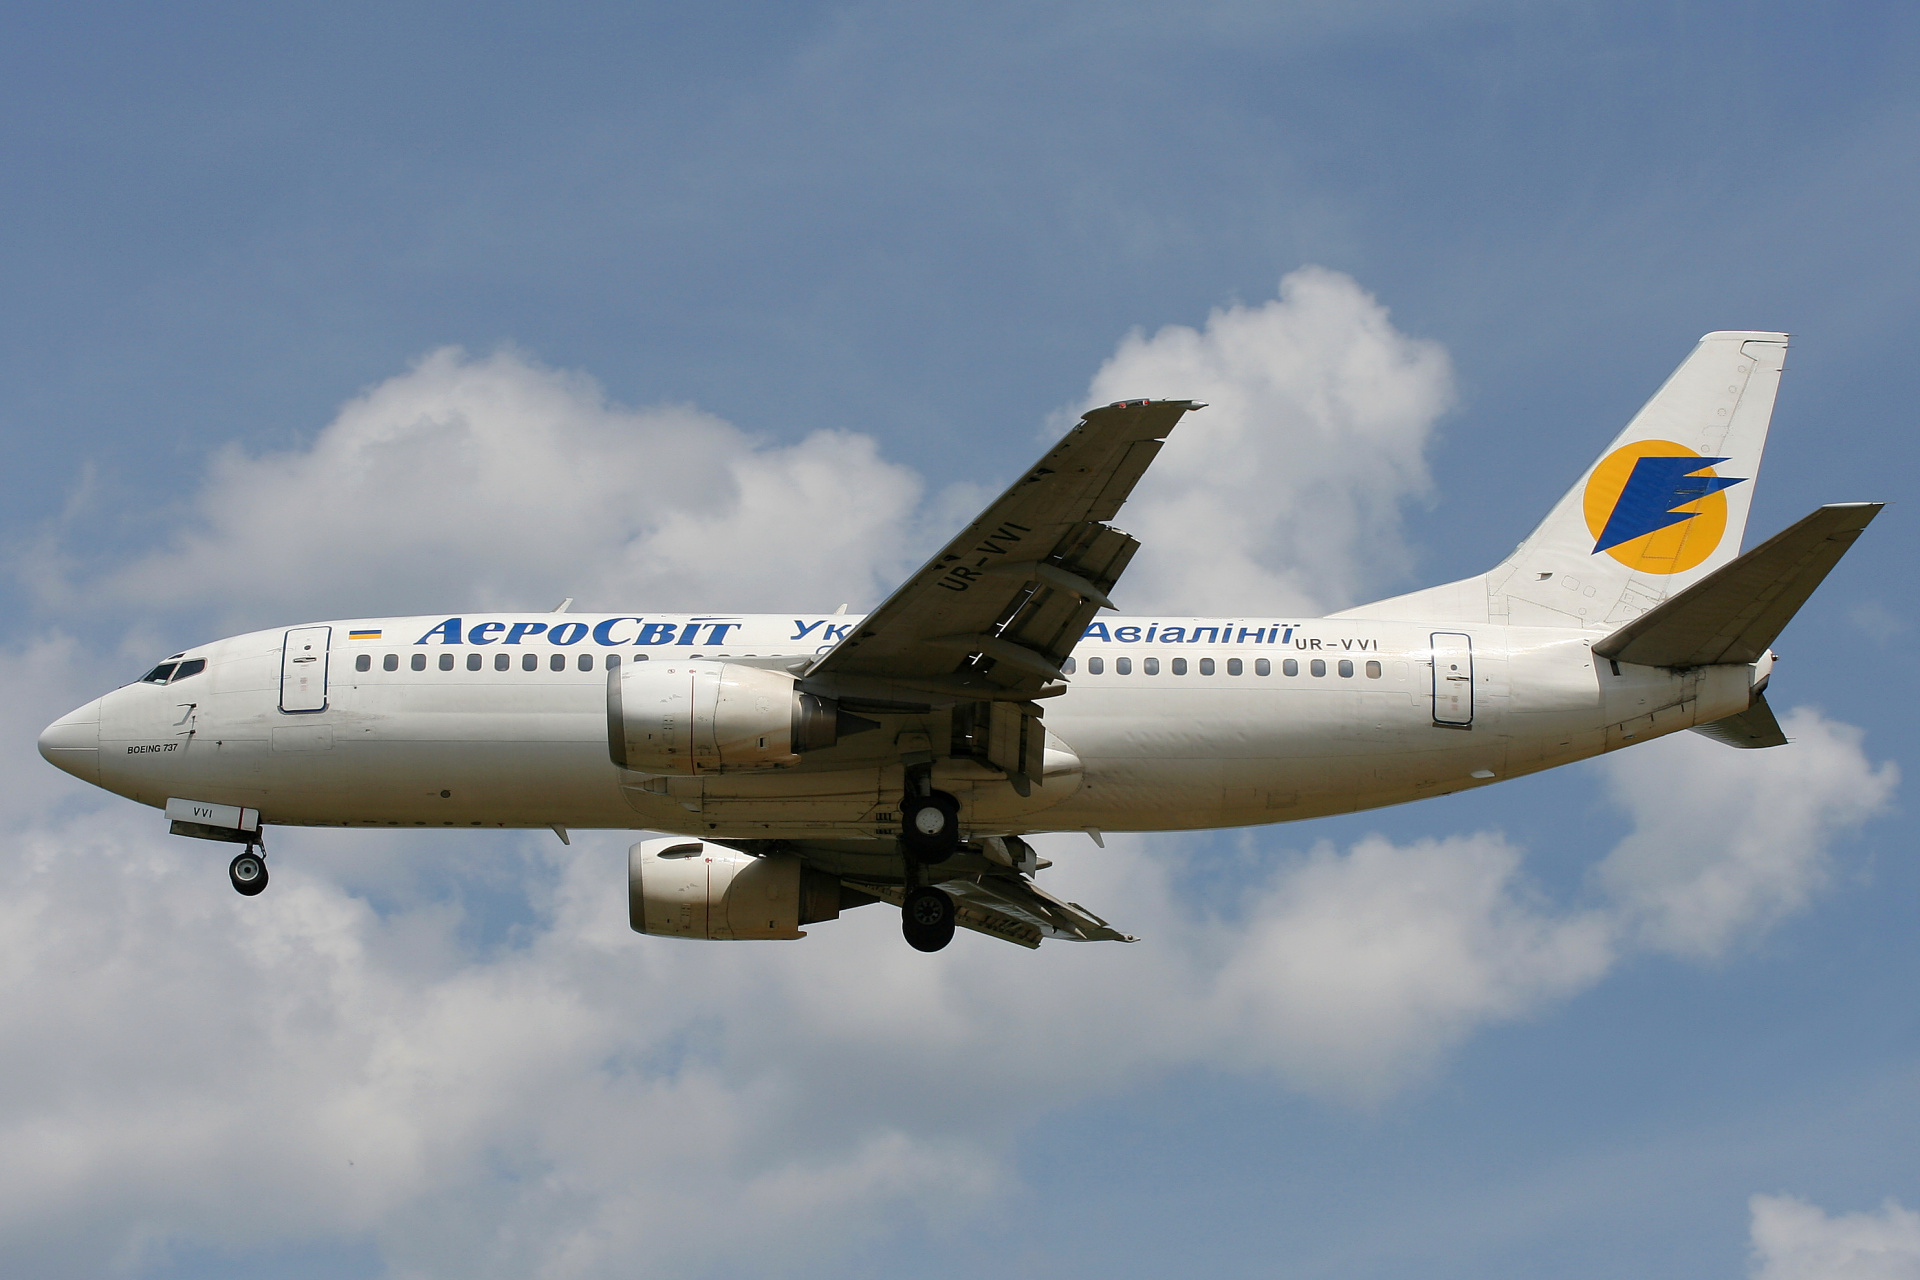 UR-VVI, AeroSvit Ukrainian Airlines (Aircraft » EPWA Spotting » Boeing 737-300)